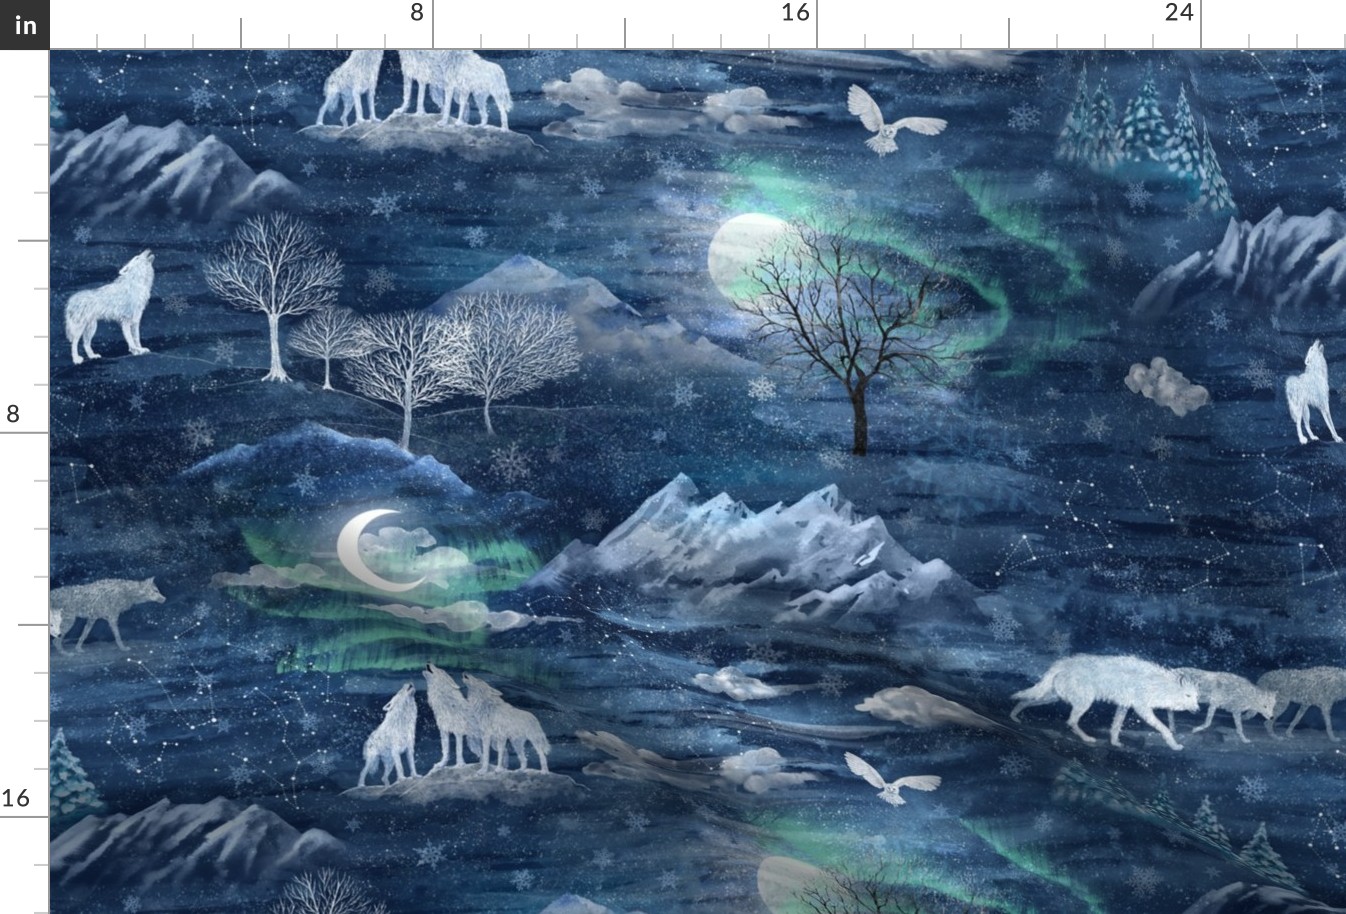 Wolfsmond, sibirian wolves in an arctic moon night with aurea boralis, Barnowl, aurora borealis, Snowflakes and stars